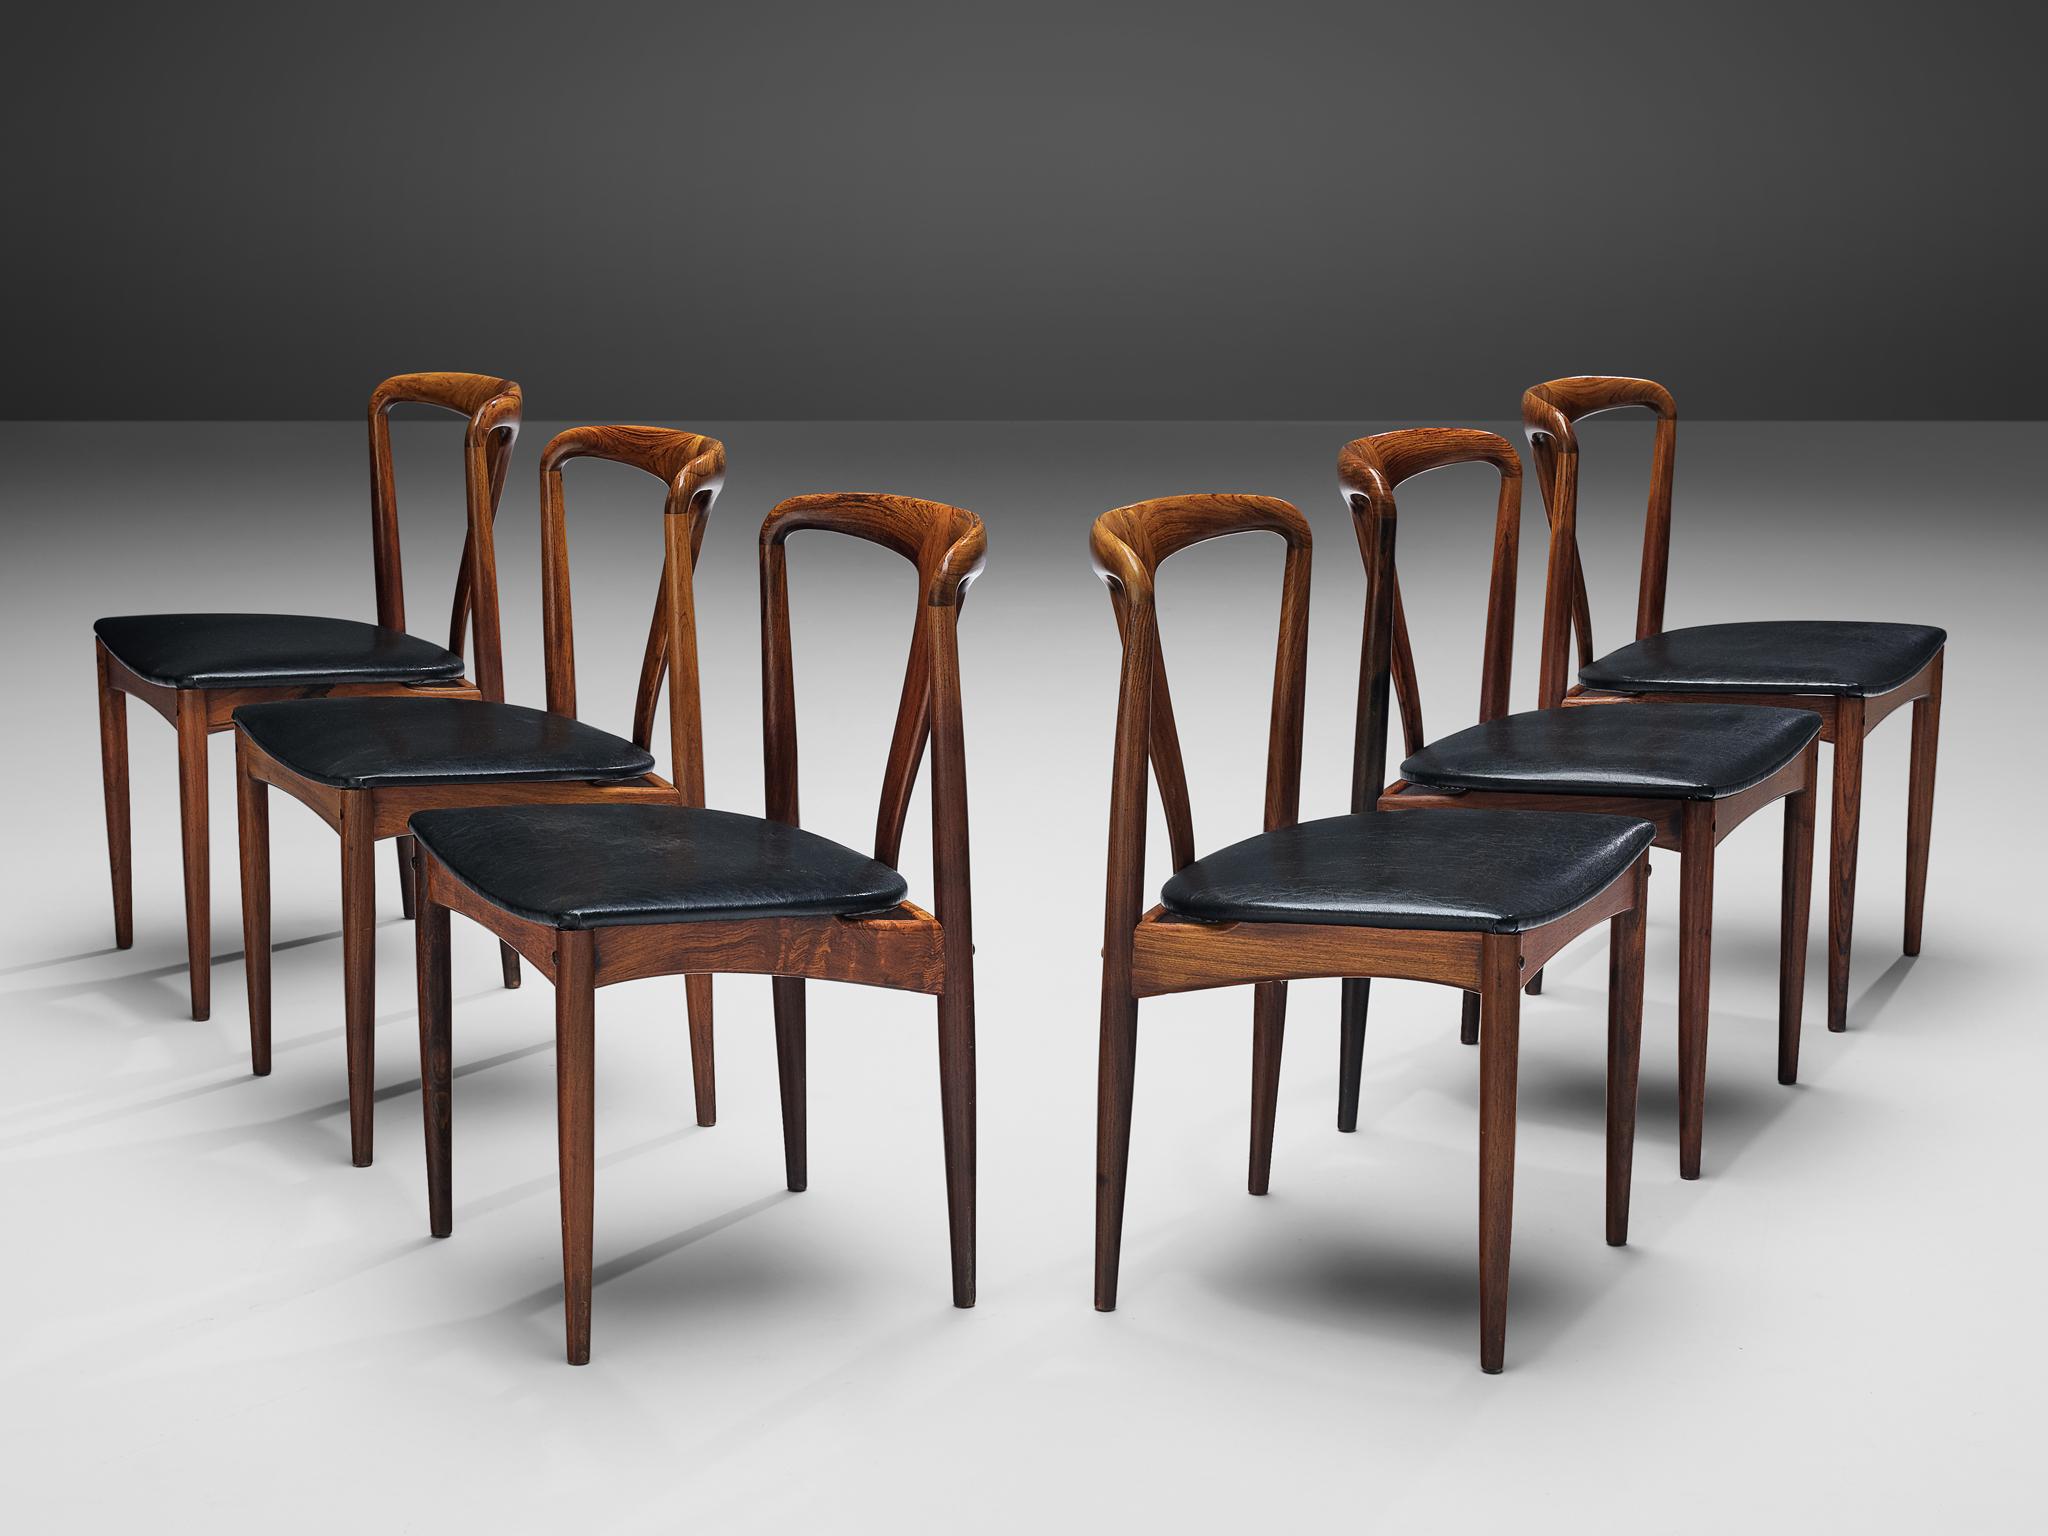 Johannes Andersen for Uldum Møbelfabrik, 'Juliane' set of six dining chairs, rosewood, faux leather, upholstery, Denmark, 1960s

This set of six dining chairs is designed by the Danish designer Johannes Andersen and produced by Uldum Møbelfrabrik in